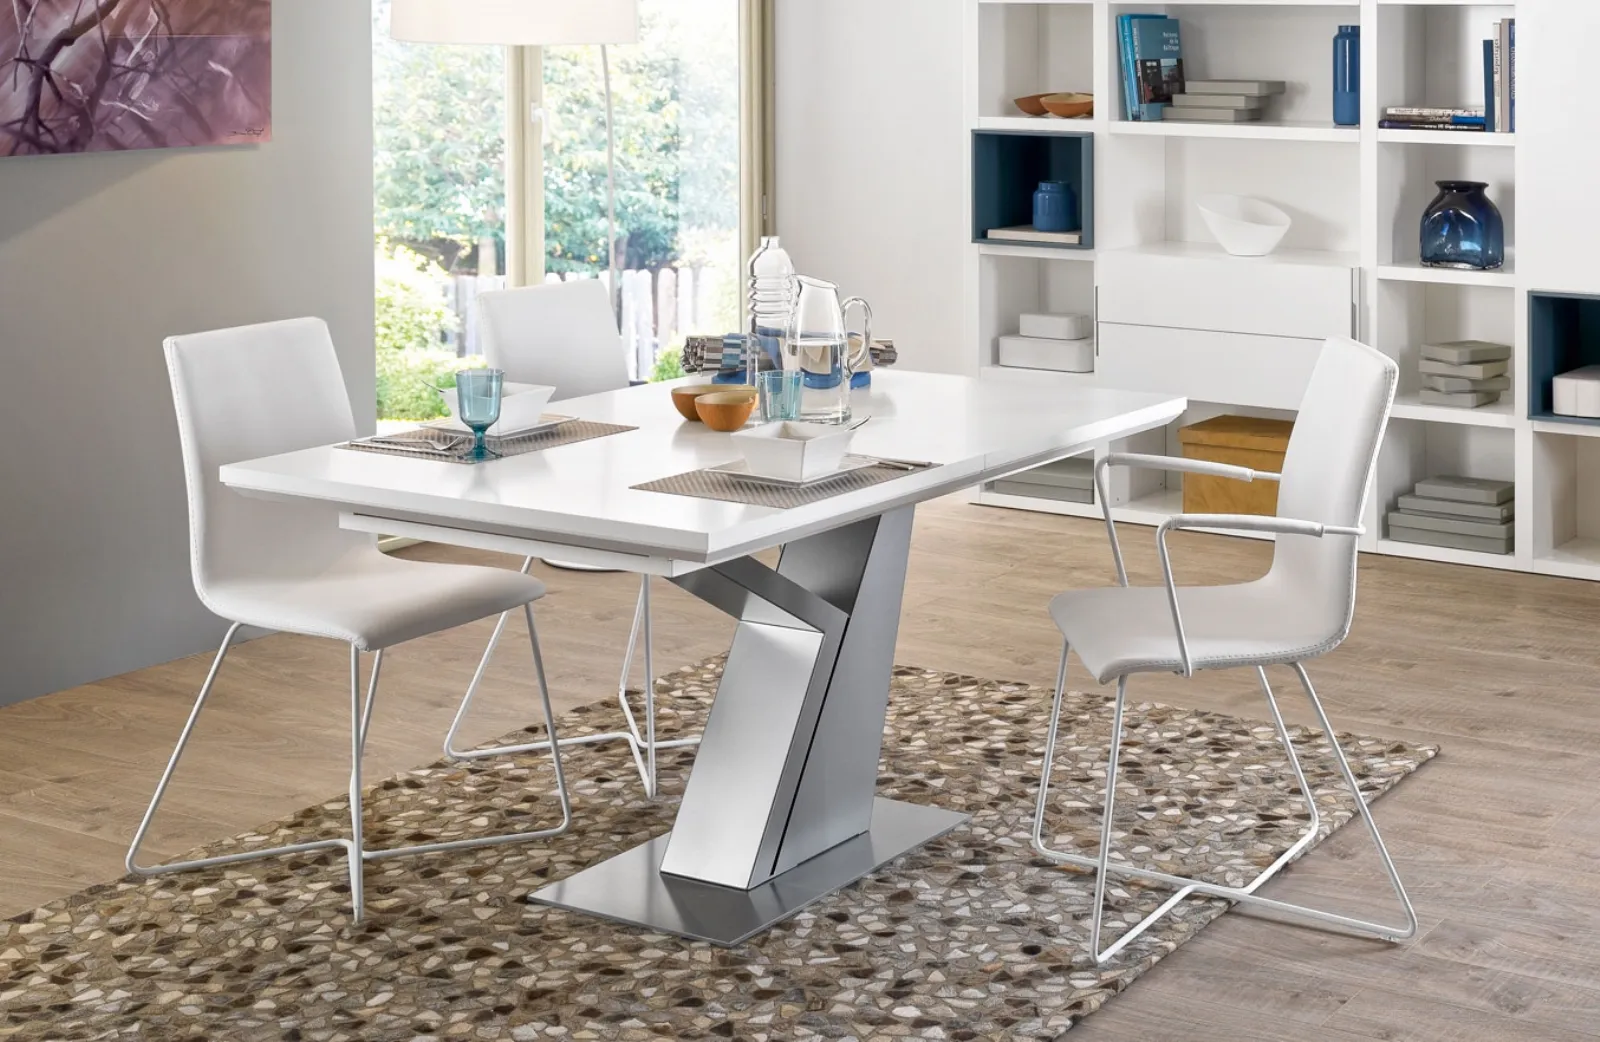 Напольный кухонные столы. Кухонный стол Mertuno 110. Обеденный стол Cobe made by Cosmo ID: 212207. Современный кухонный стол. Необычные кухонные столы.